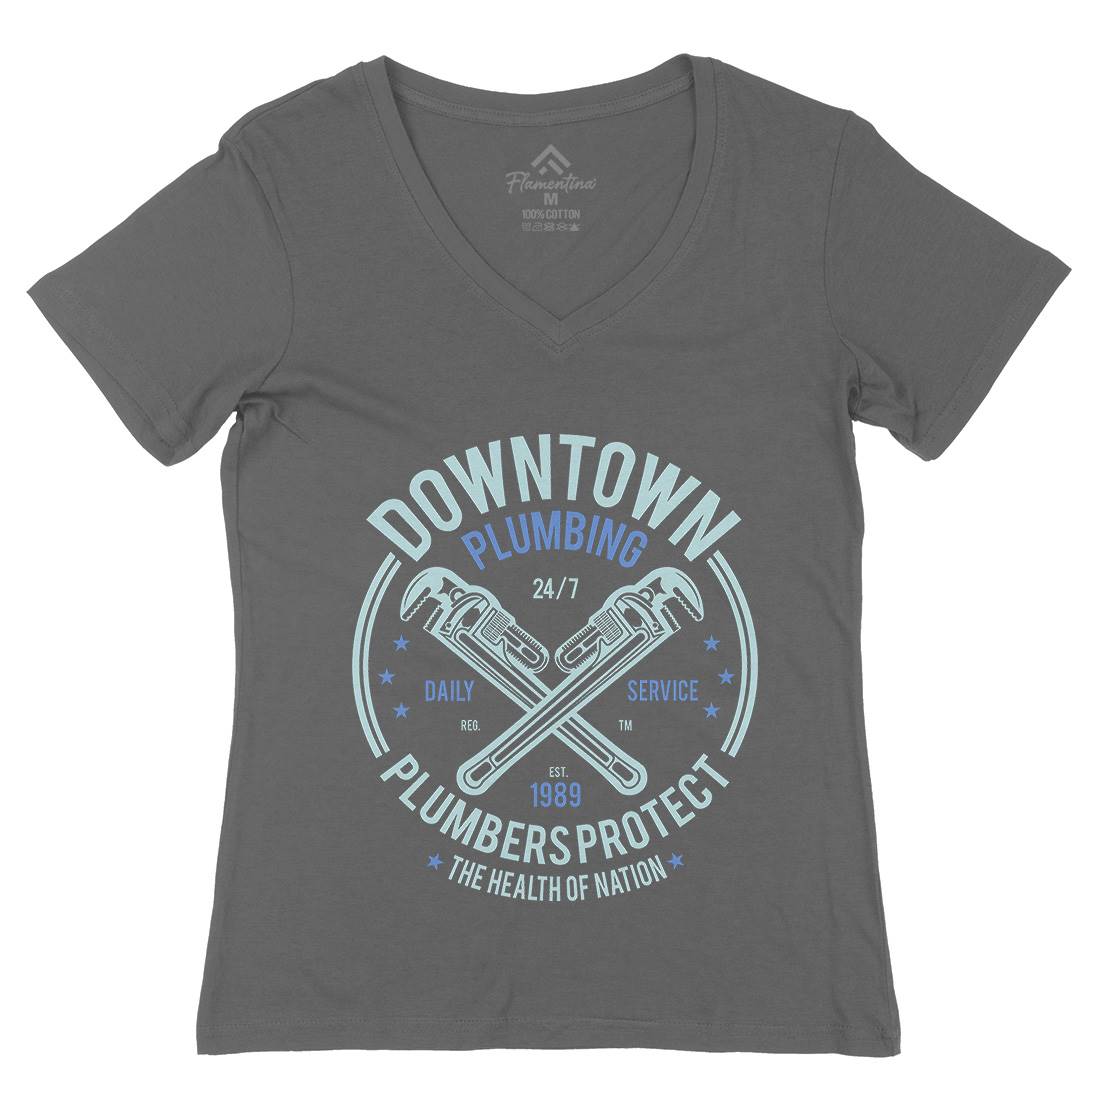 Downtown Plumbing Womens Organic V-Neck T-Shirt Work A046